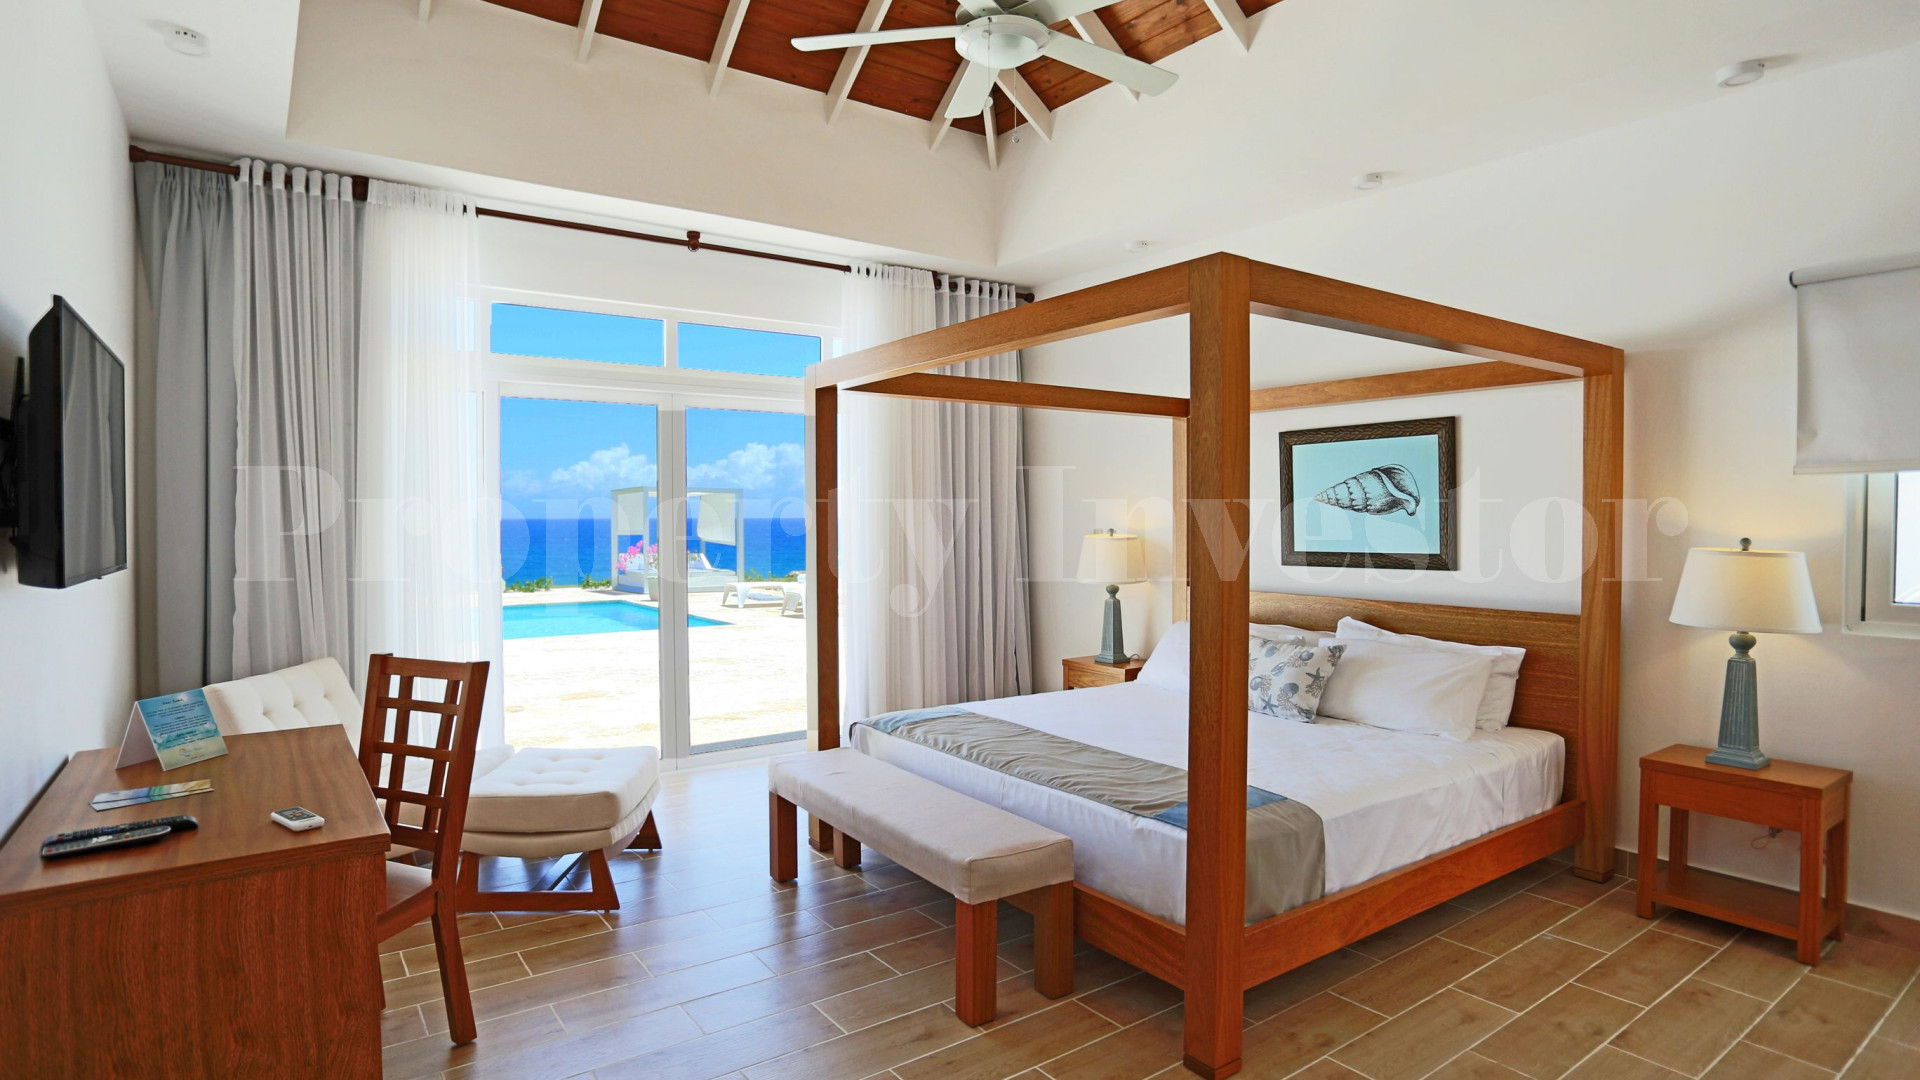 3 Bedroom Oceanfront Villa in the Dominican Republic with 30 Year Financing (Villa 4)